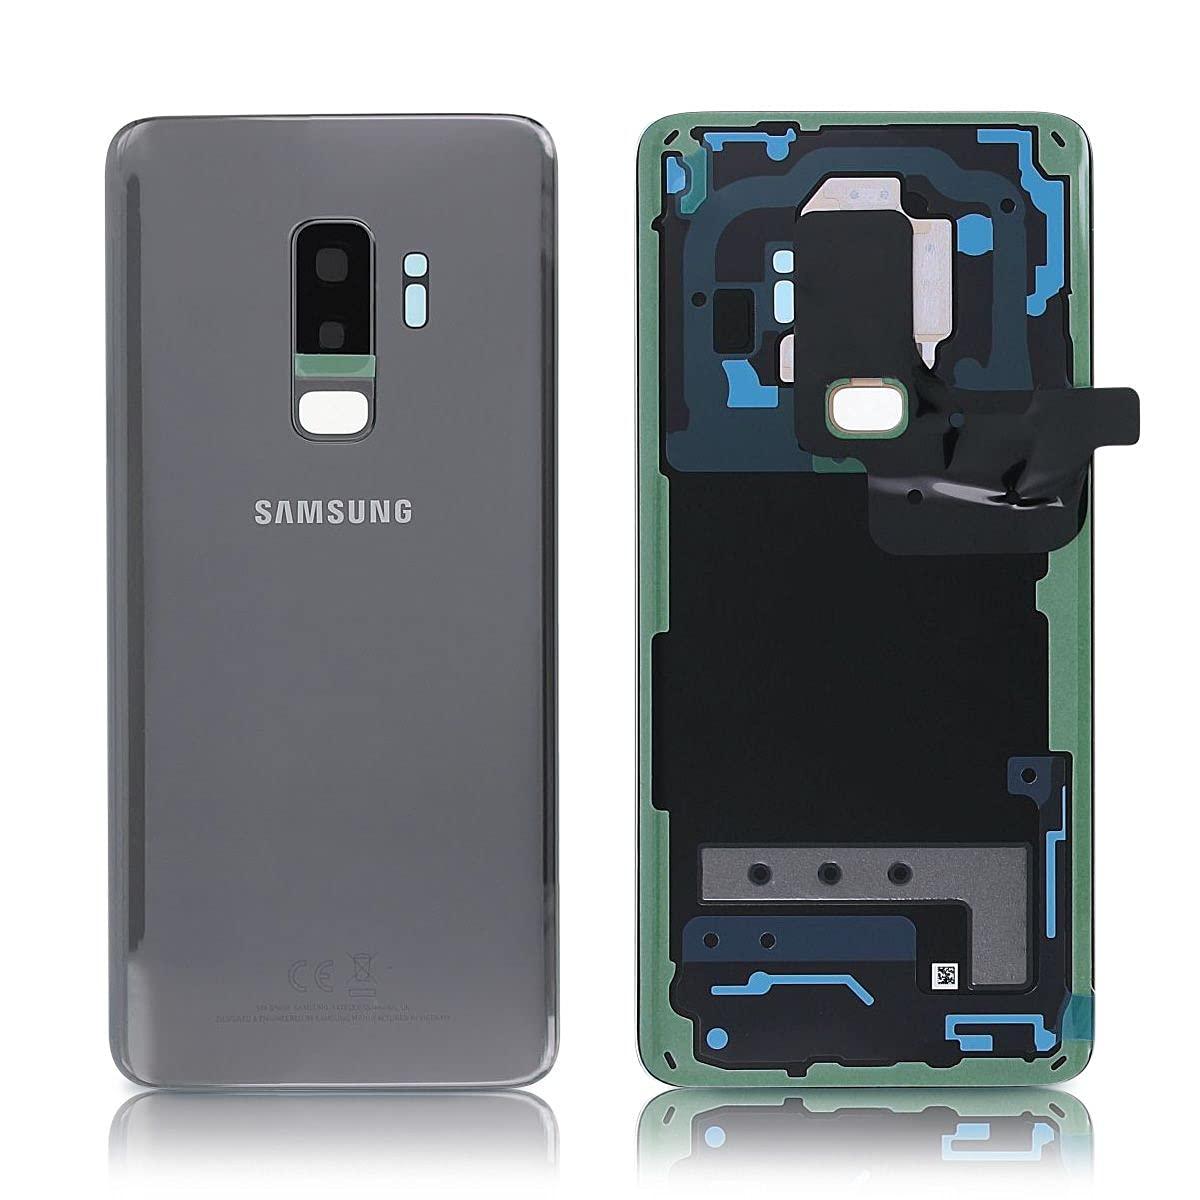 Originál kryt baterie Samsung Galaxy S9 Plus SM-G965 Titanium gray šedý